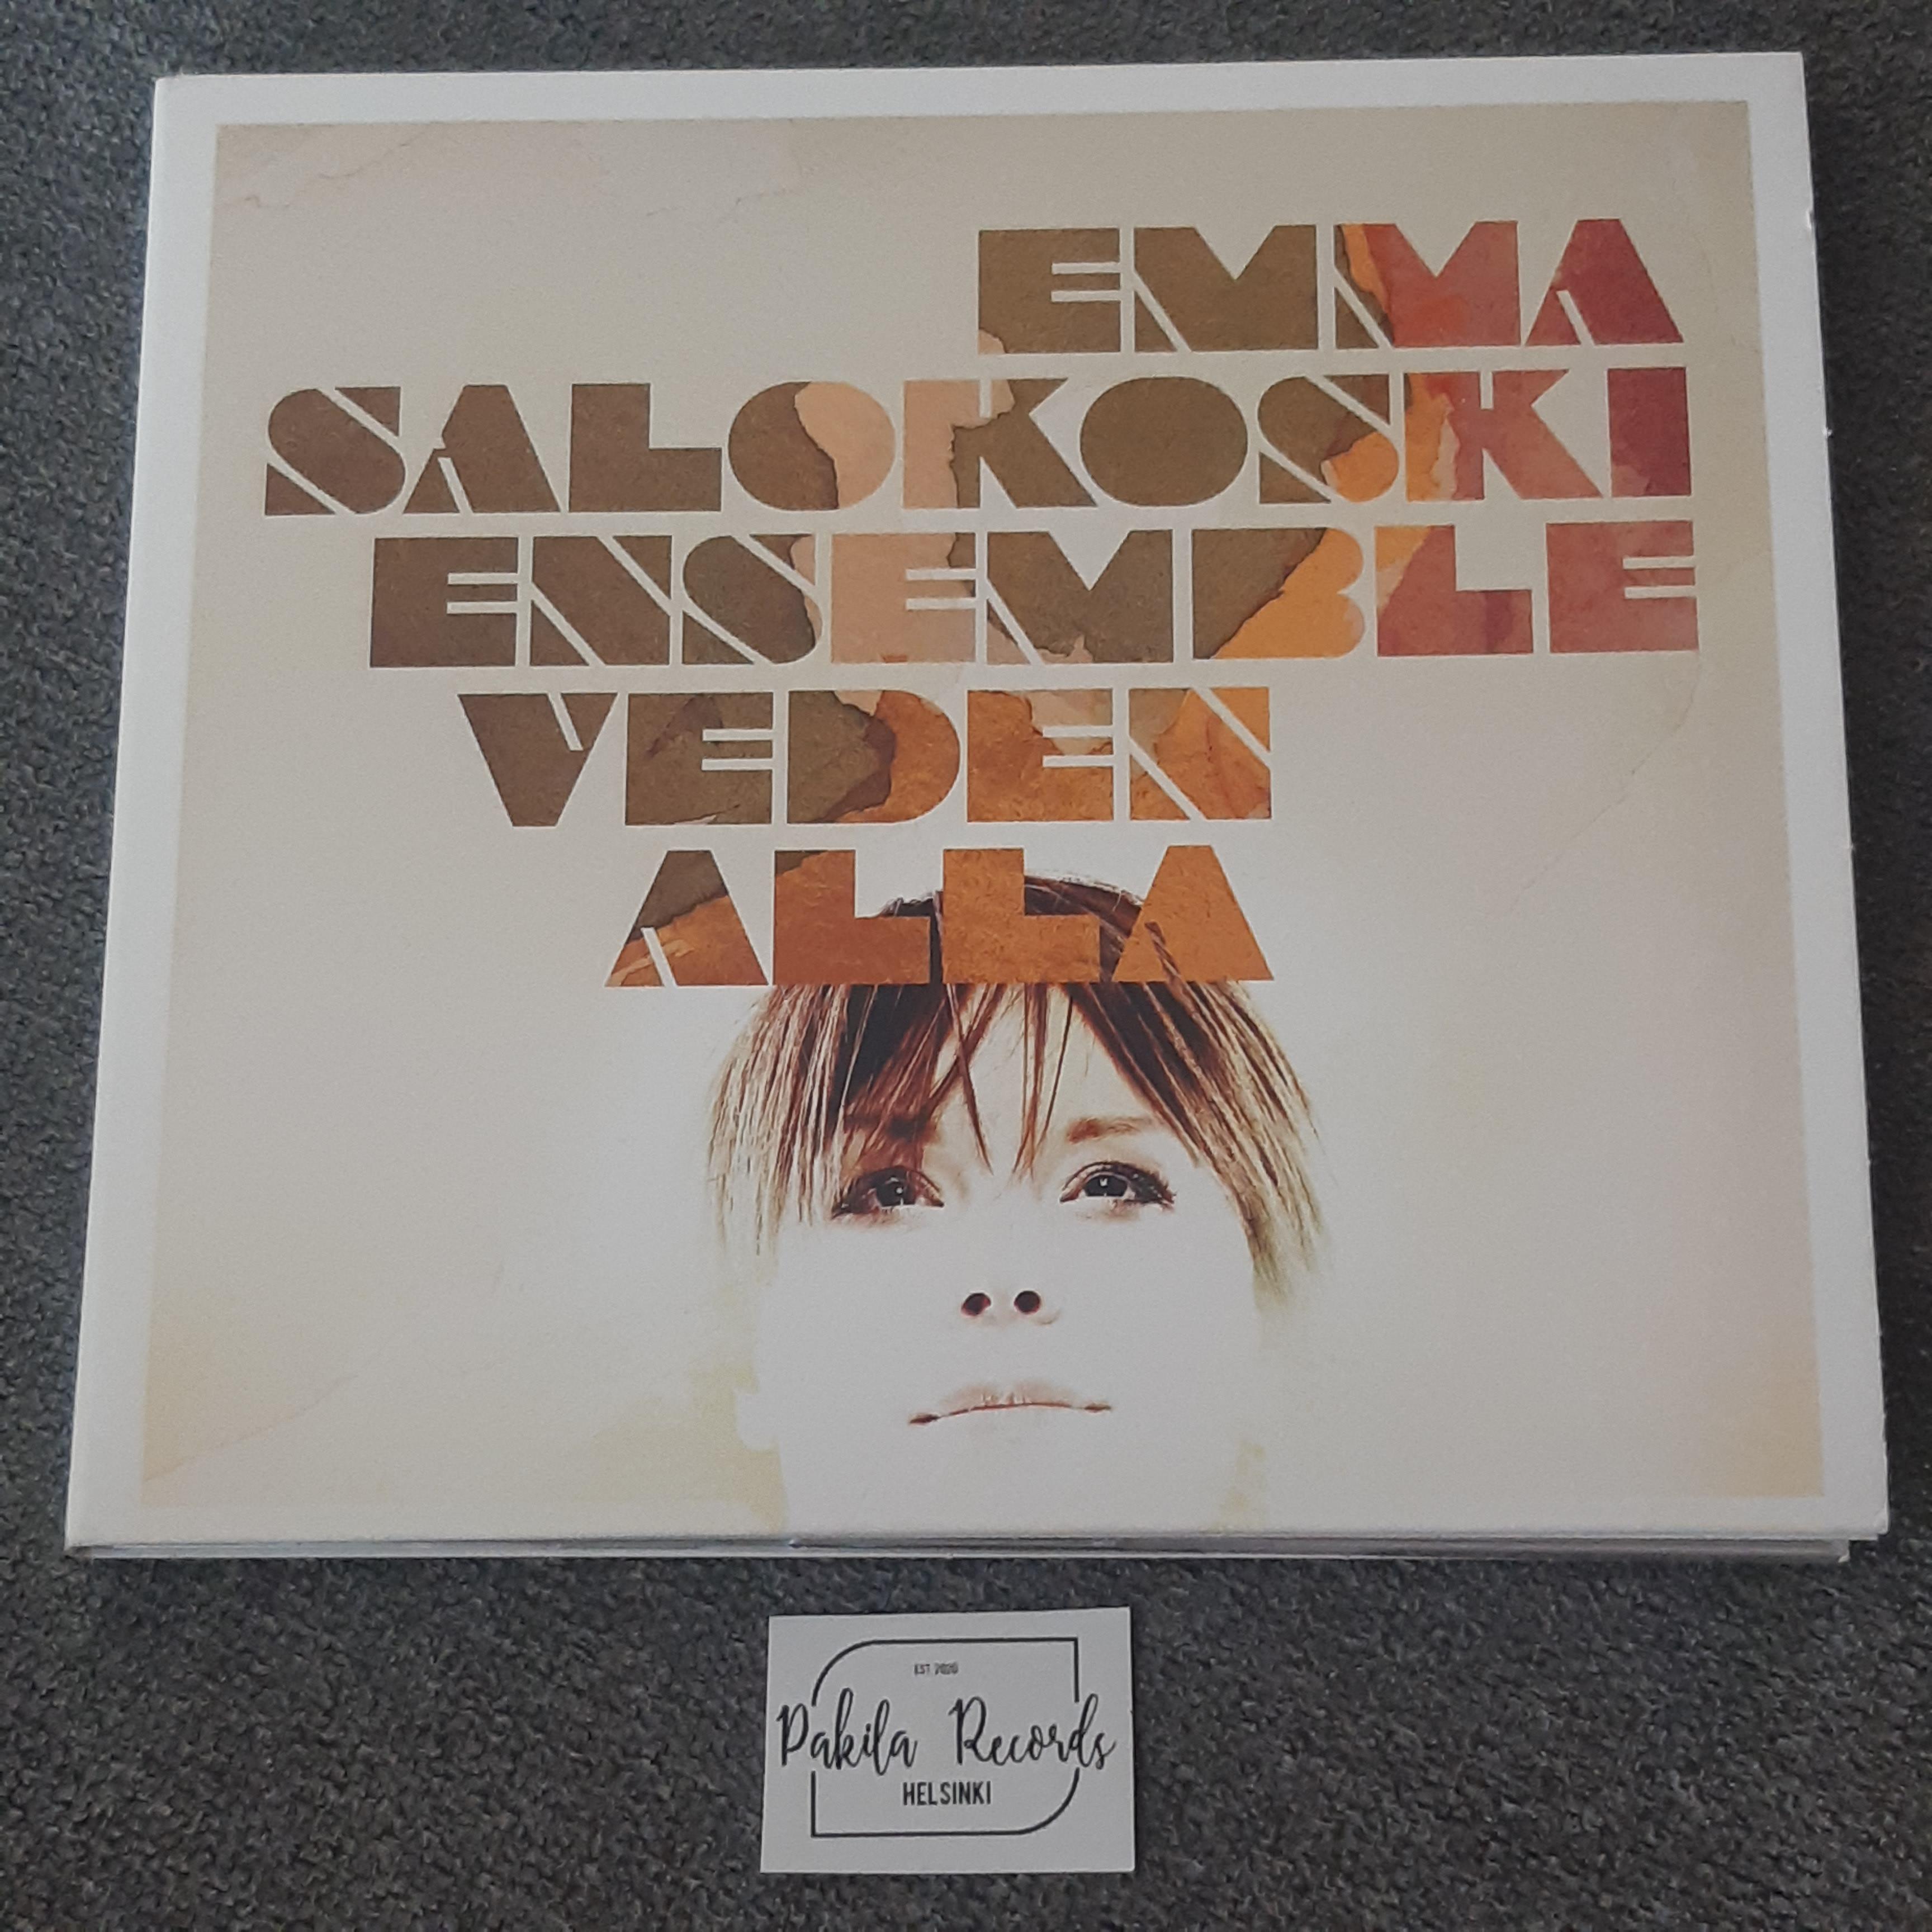 Emma Salokoski Ensemble - Veden alla - CD (käytetty)